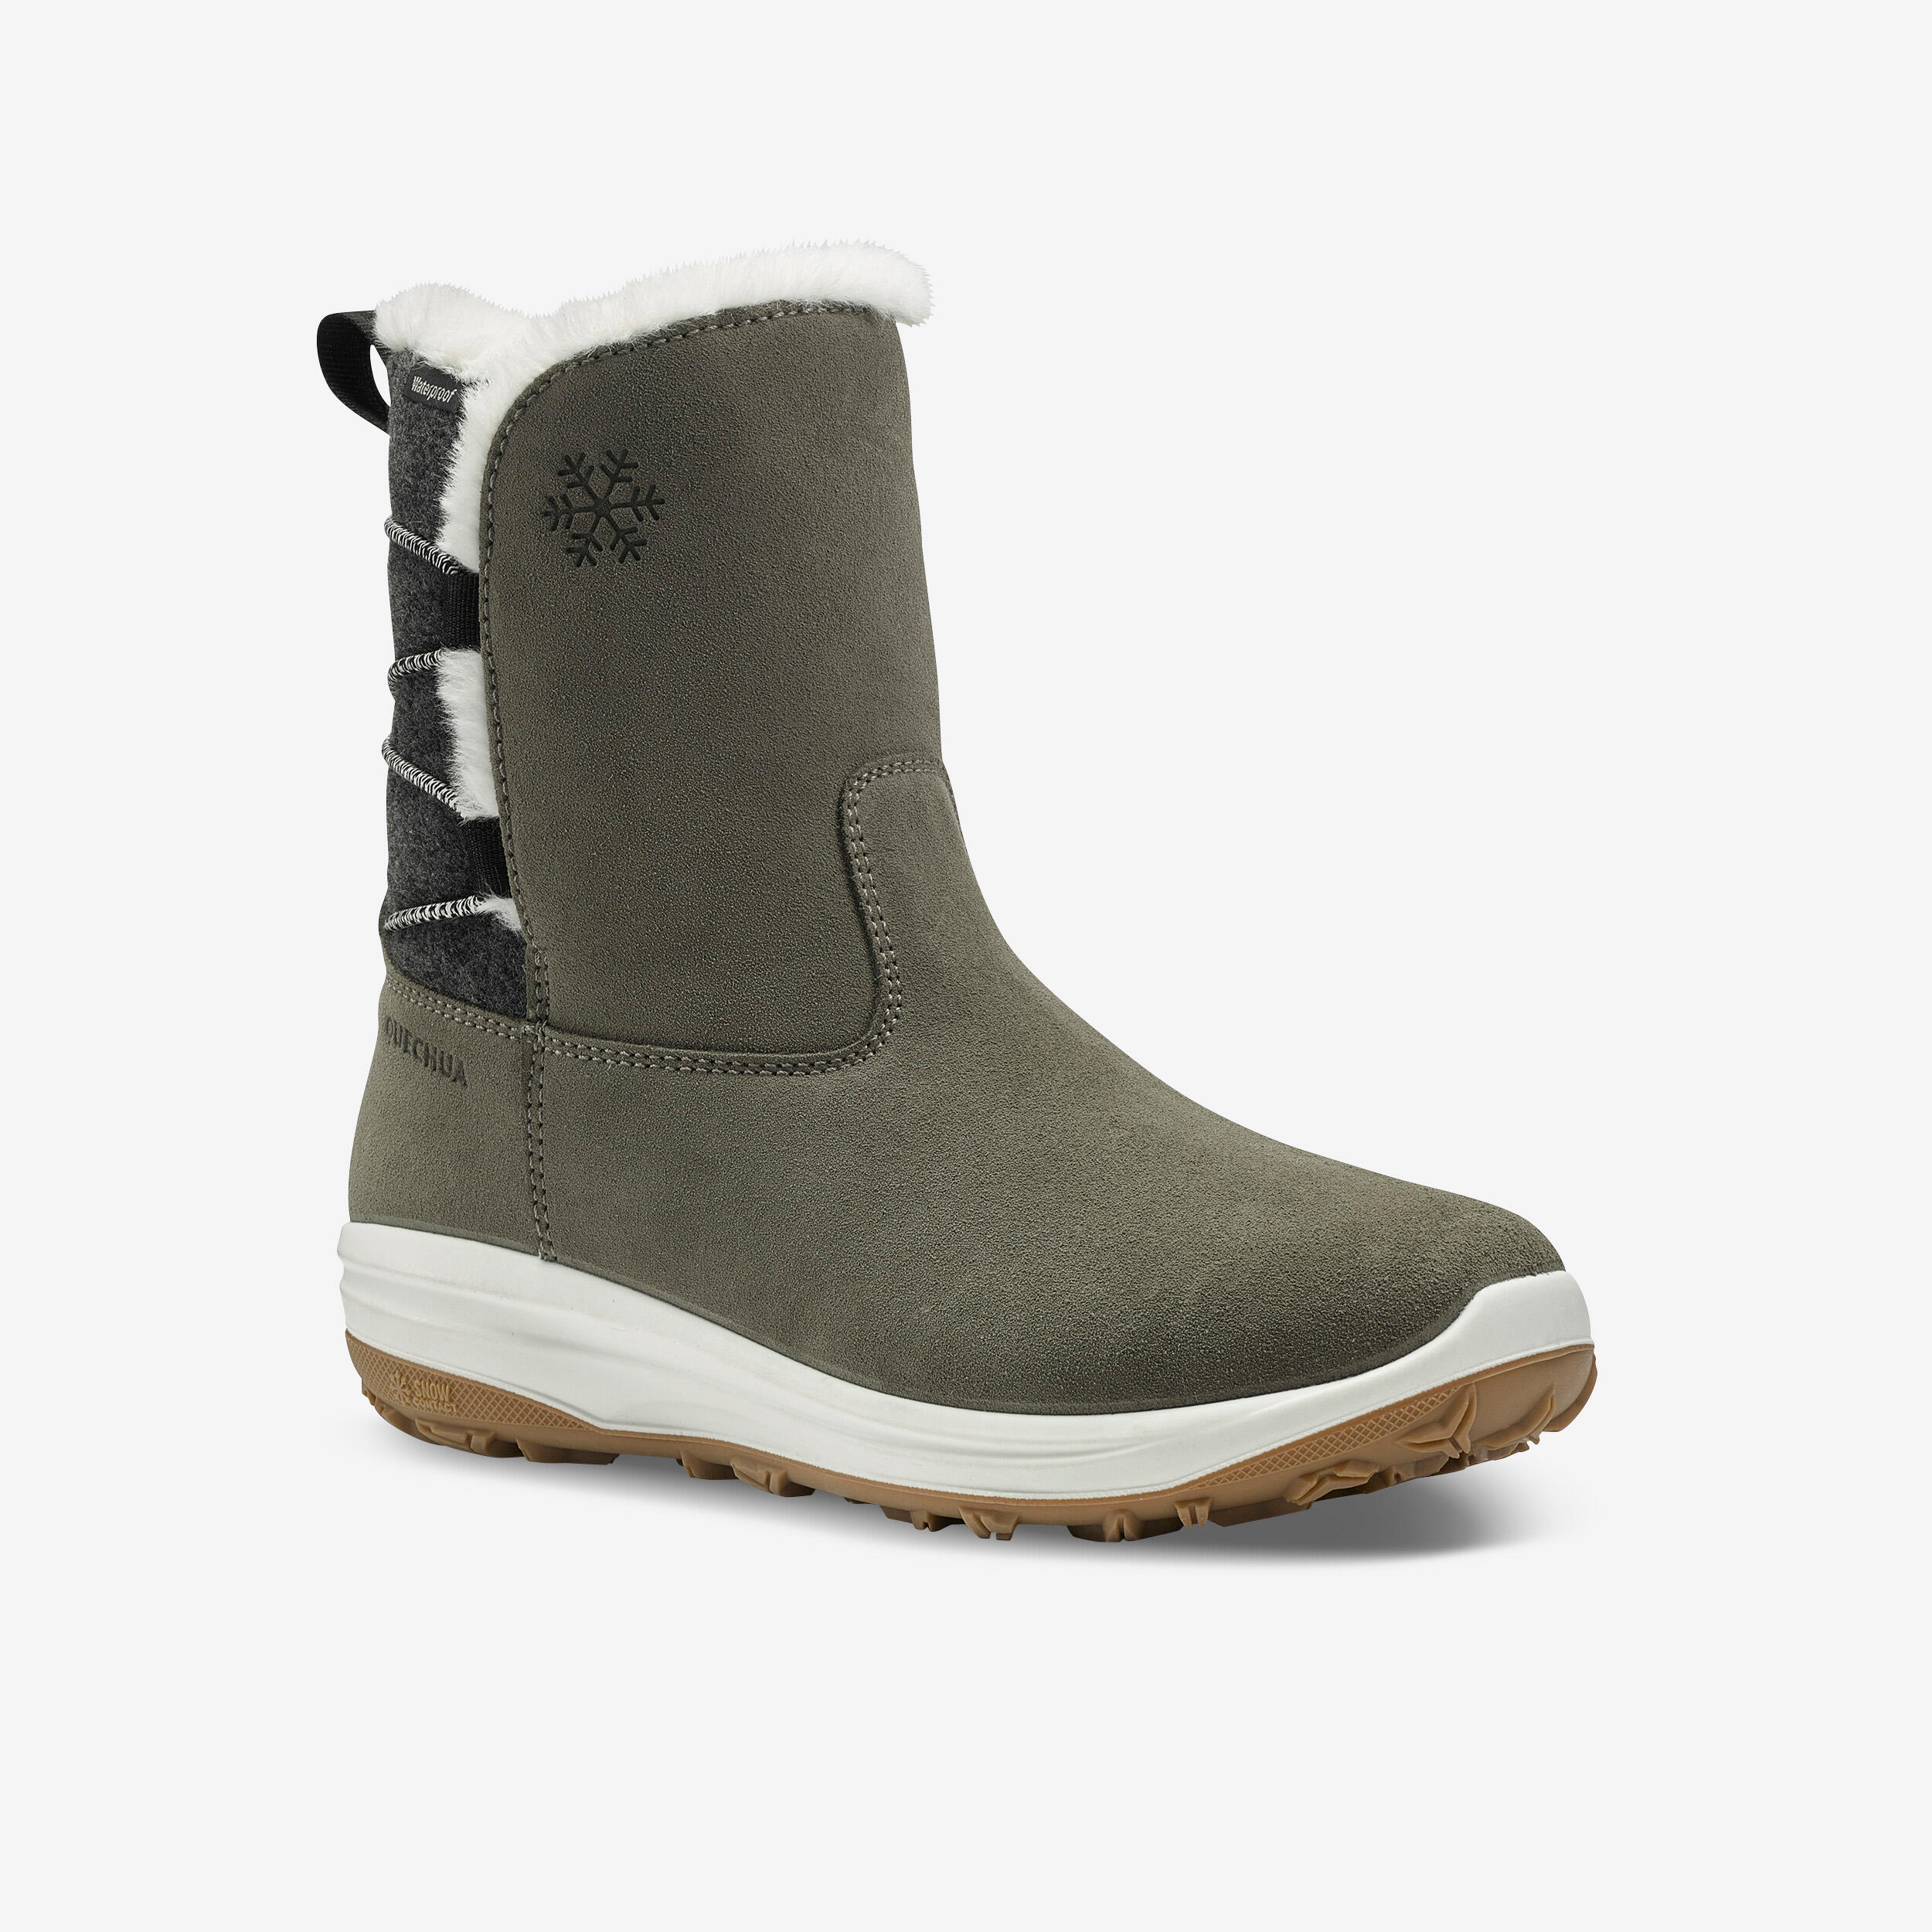 QUECHUA Women's warm waterproof snow hiking boots - SH500 leather